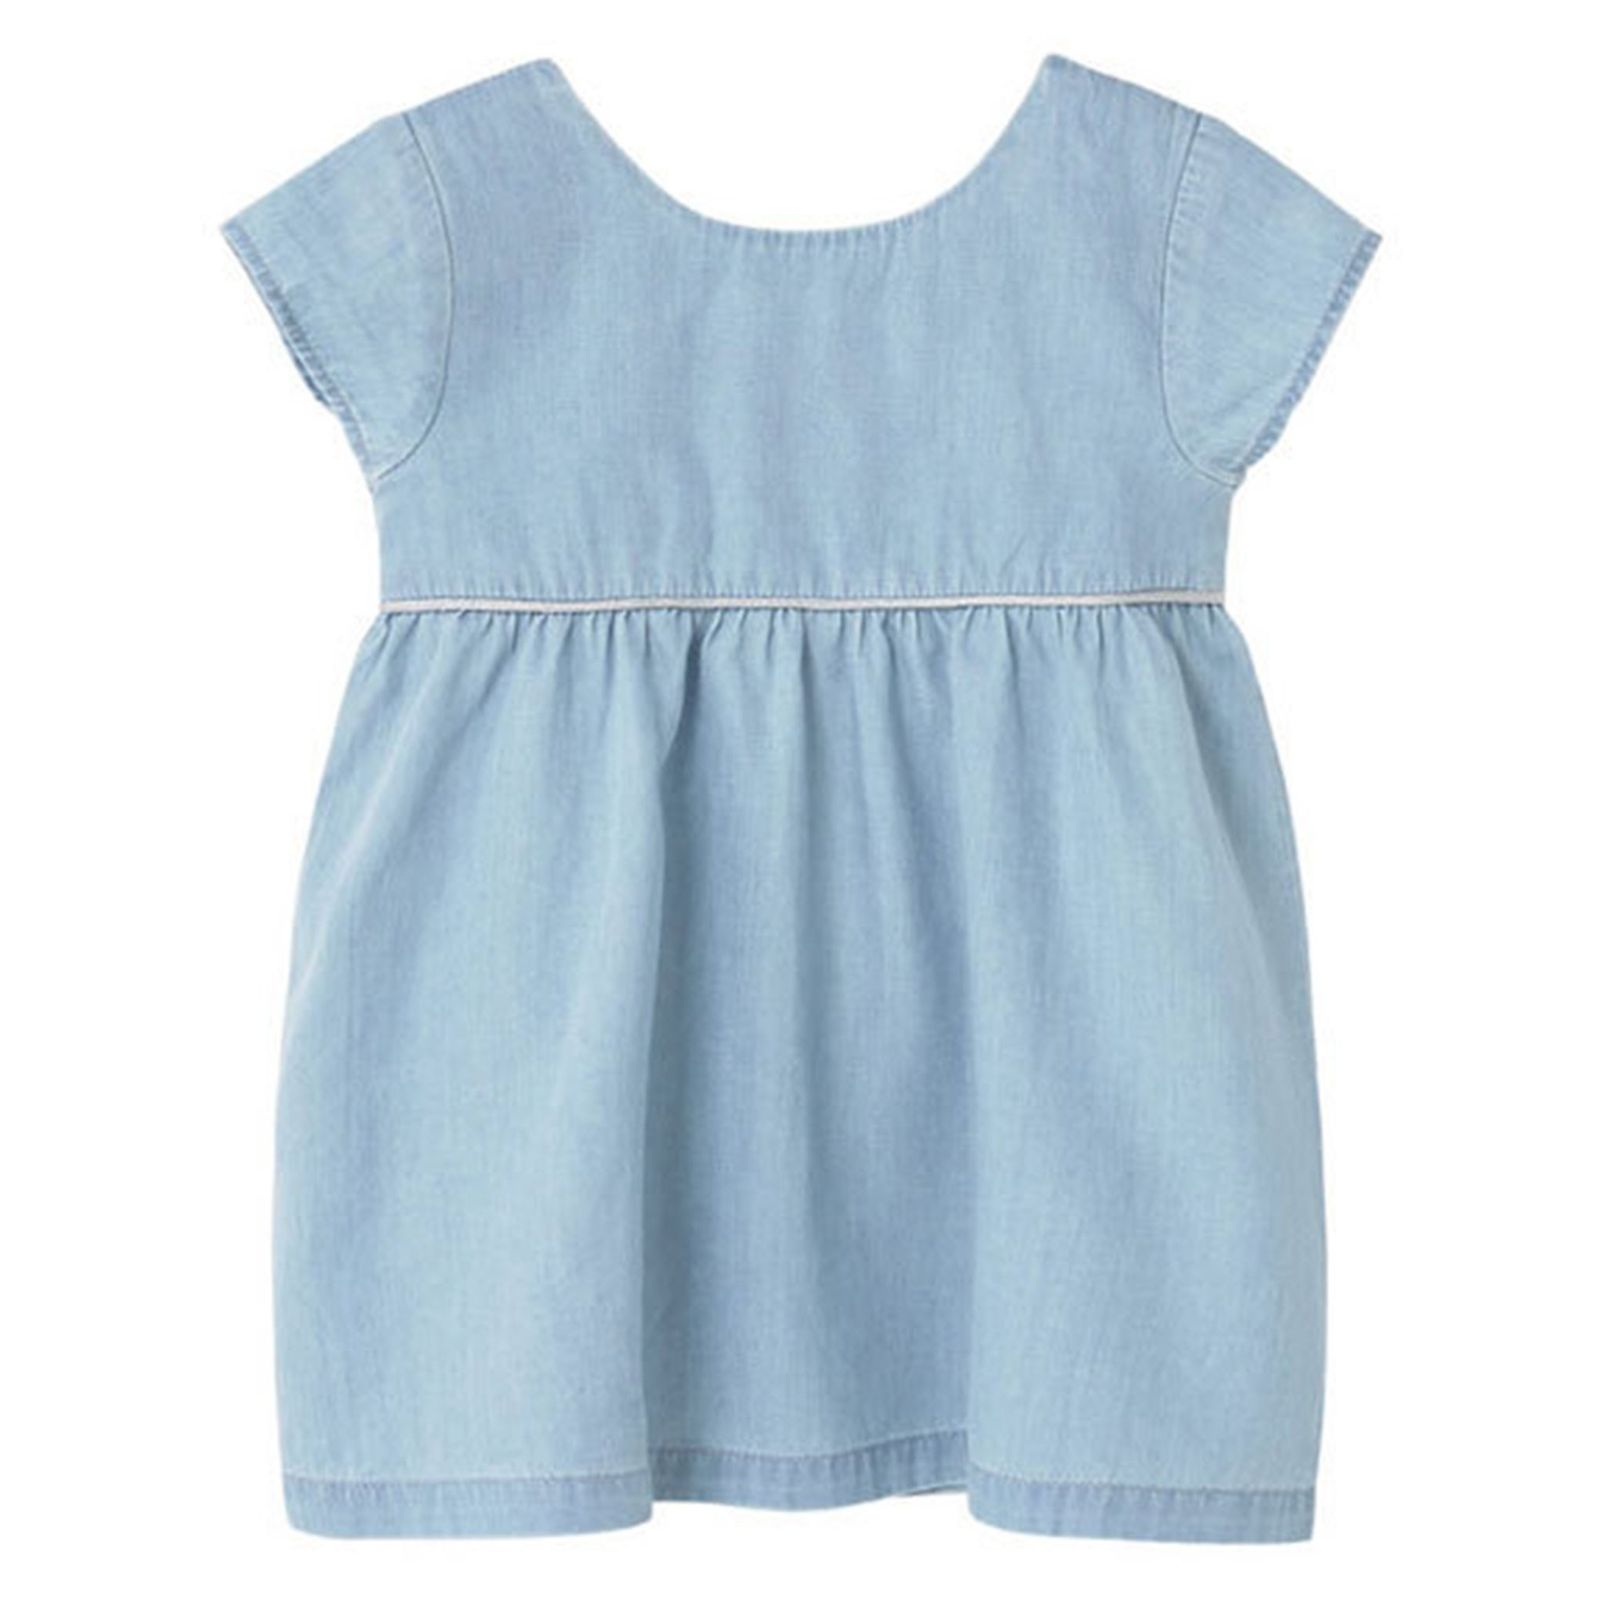 پیراهن جین نوزادی دخترانه - مانگو - آبي روشن - 1